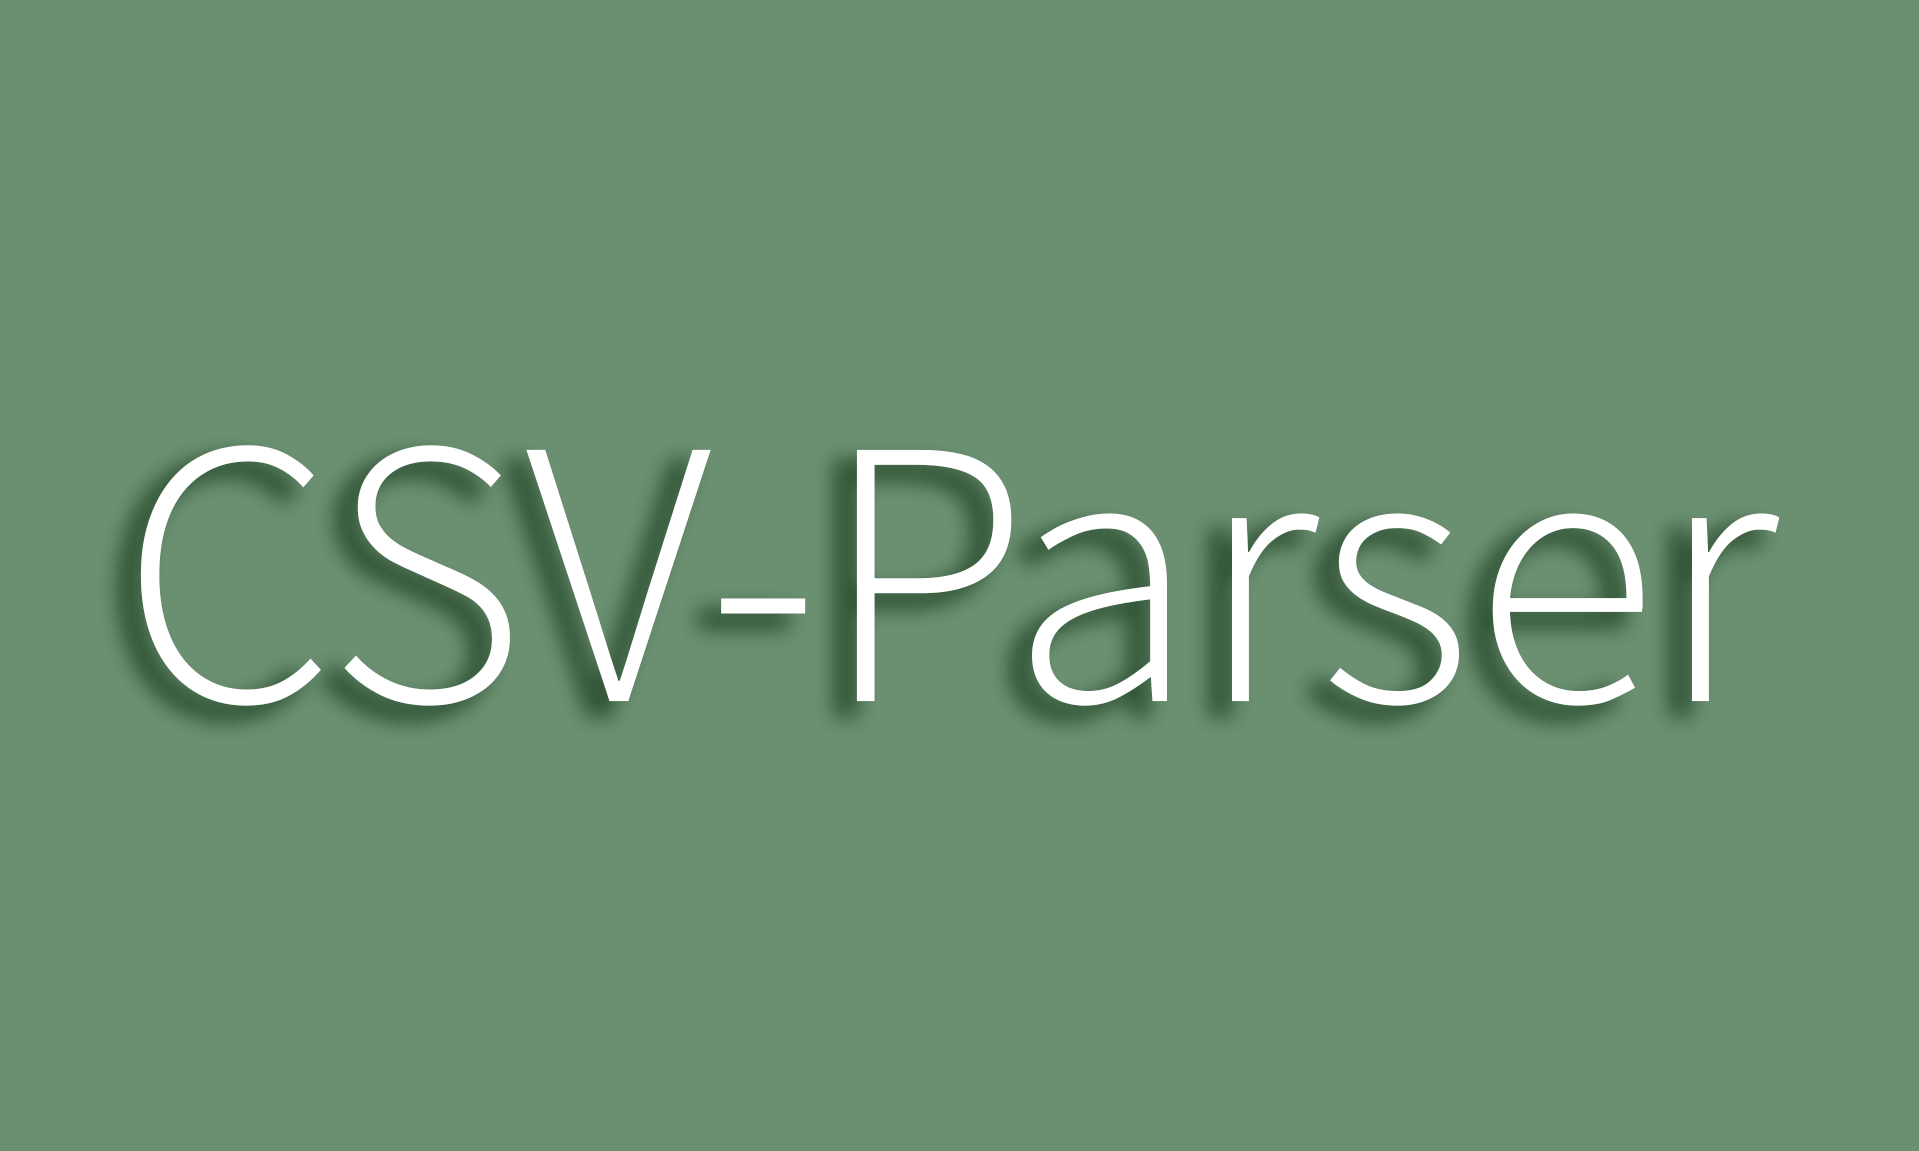 CSV-Parser